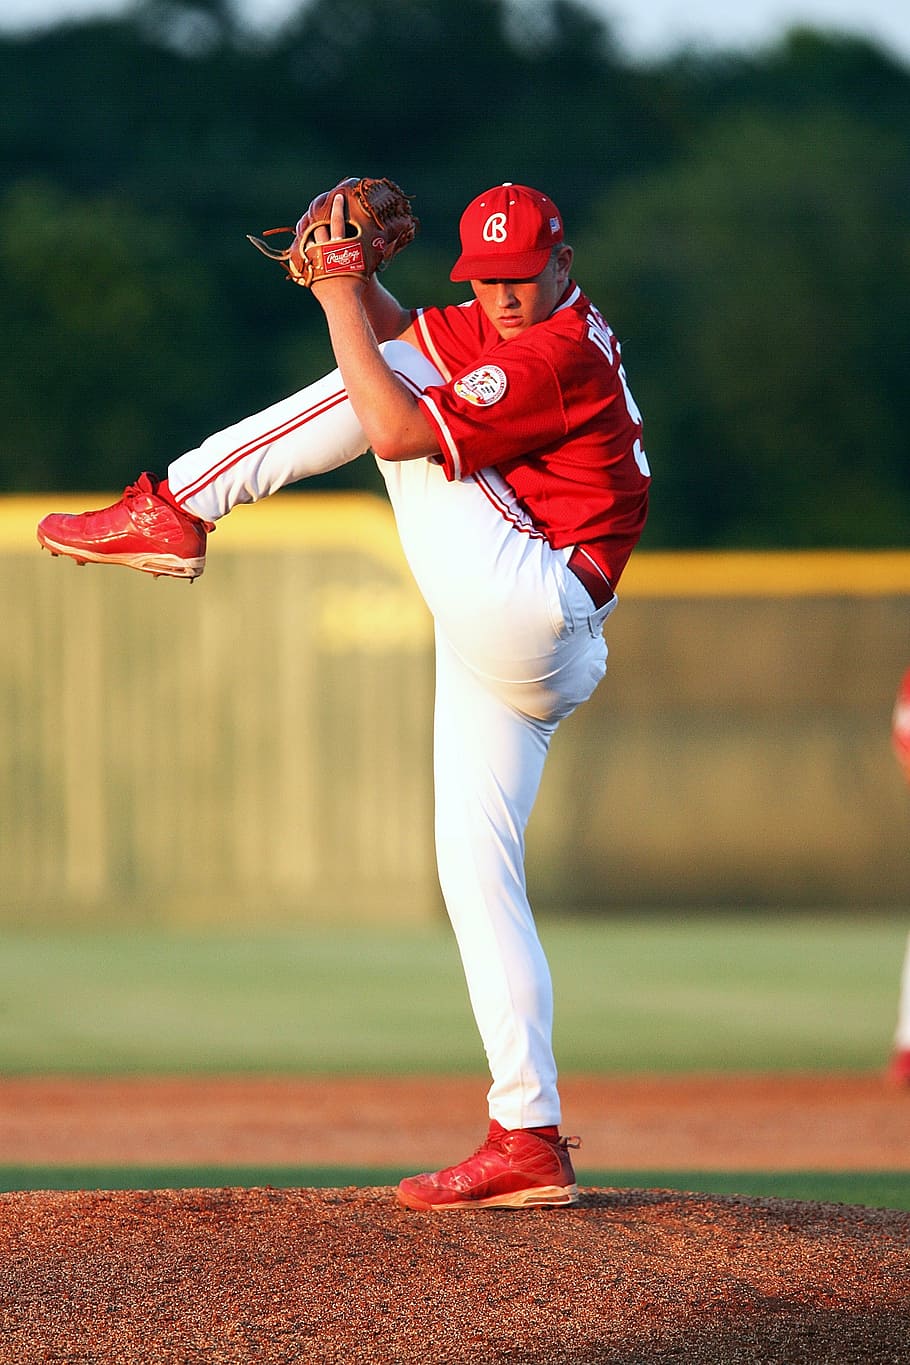 baseball player throwing ball at daytime, pitcher, action, athlete